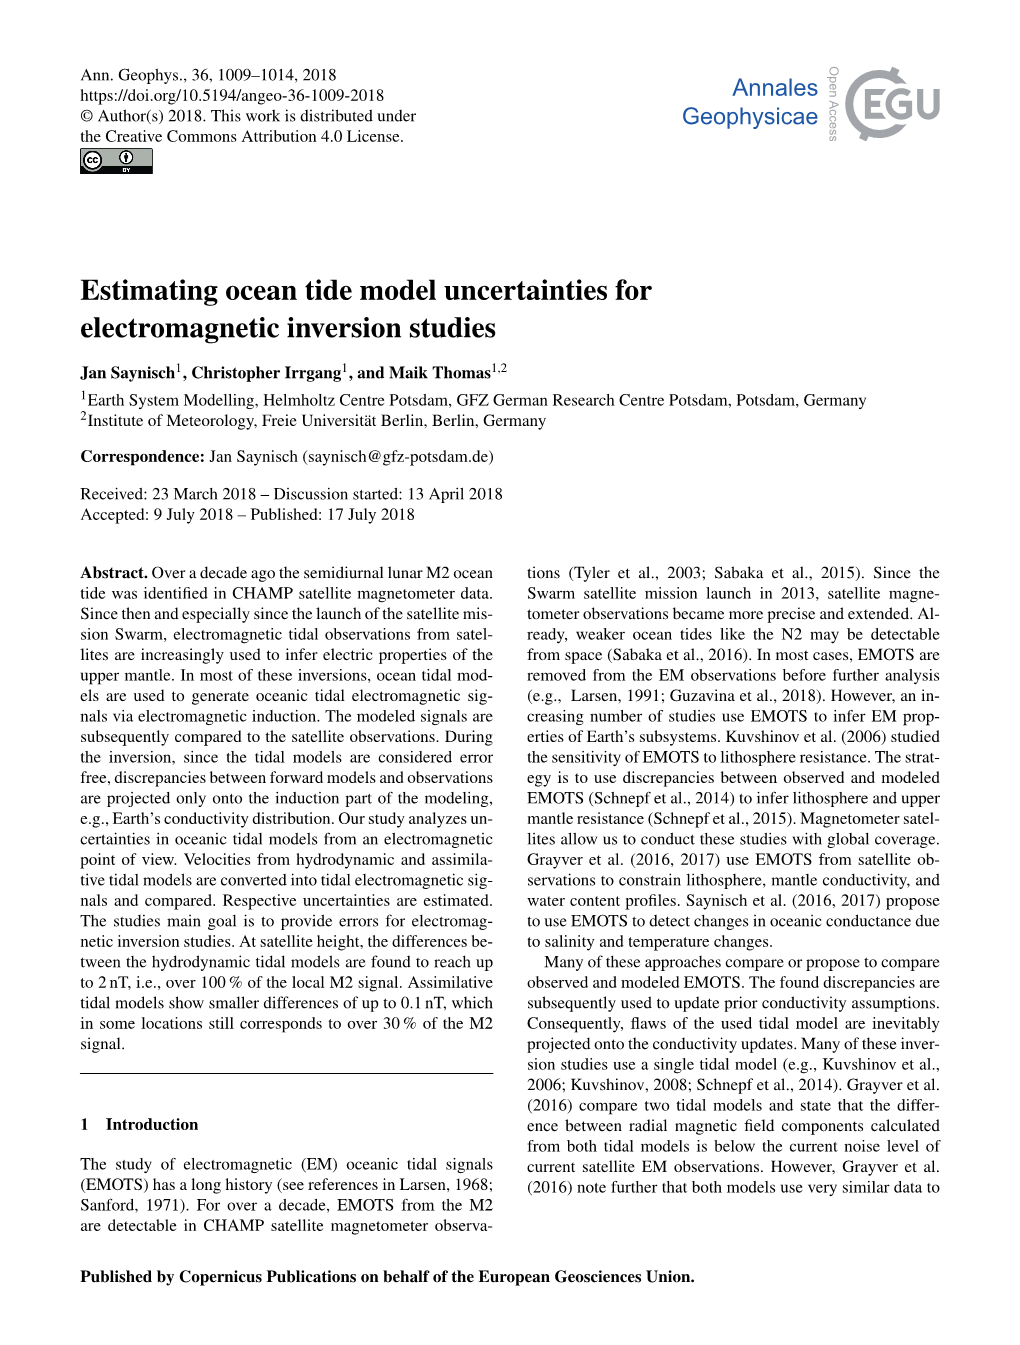 Estimating Ocean Tide Model Uncertainties for Electromagnetic Inversion Studies